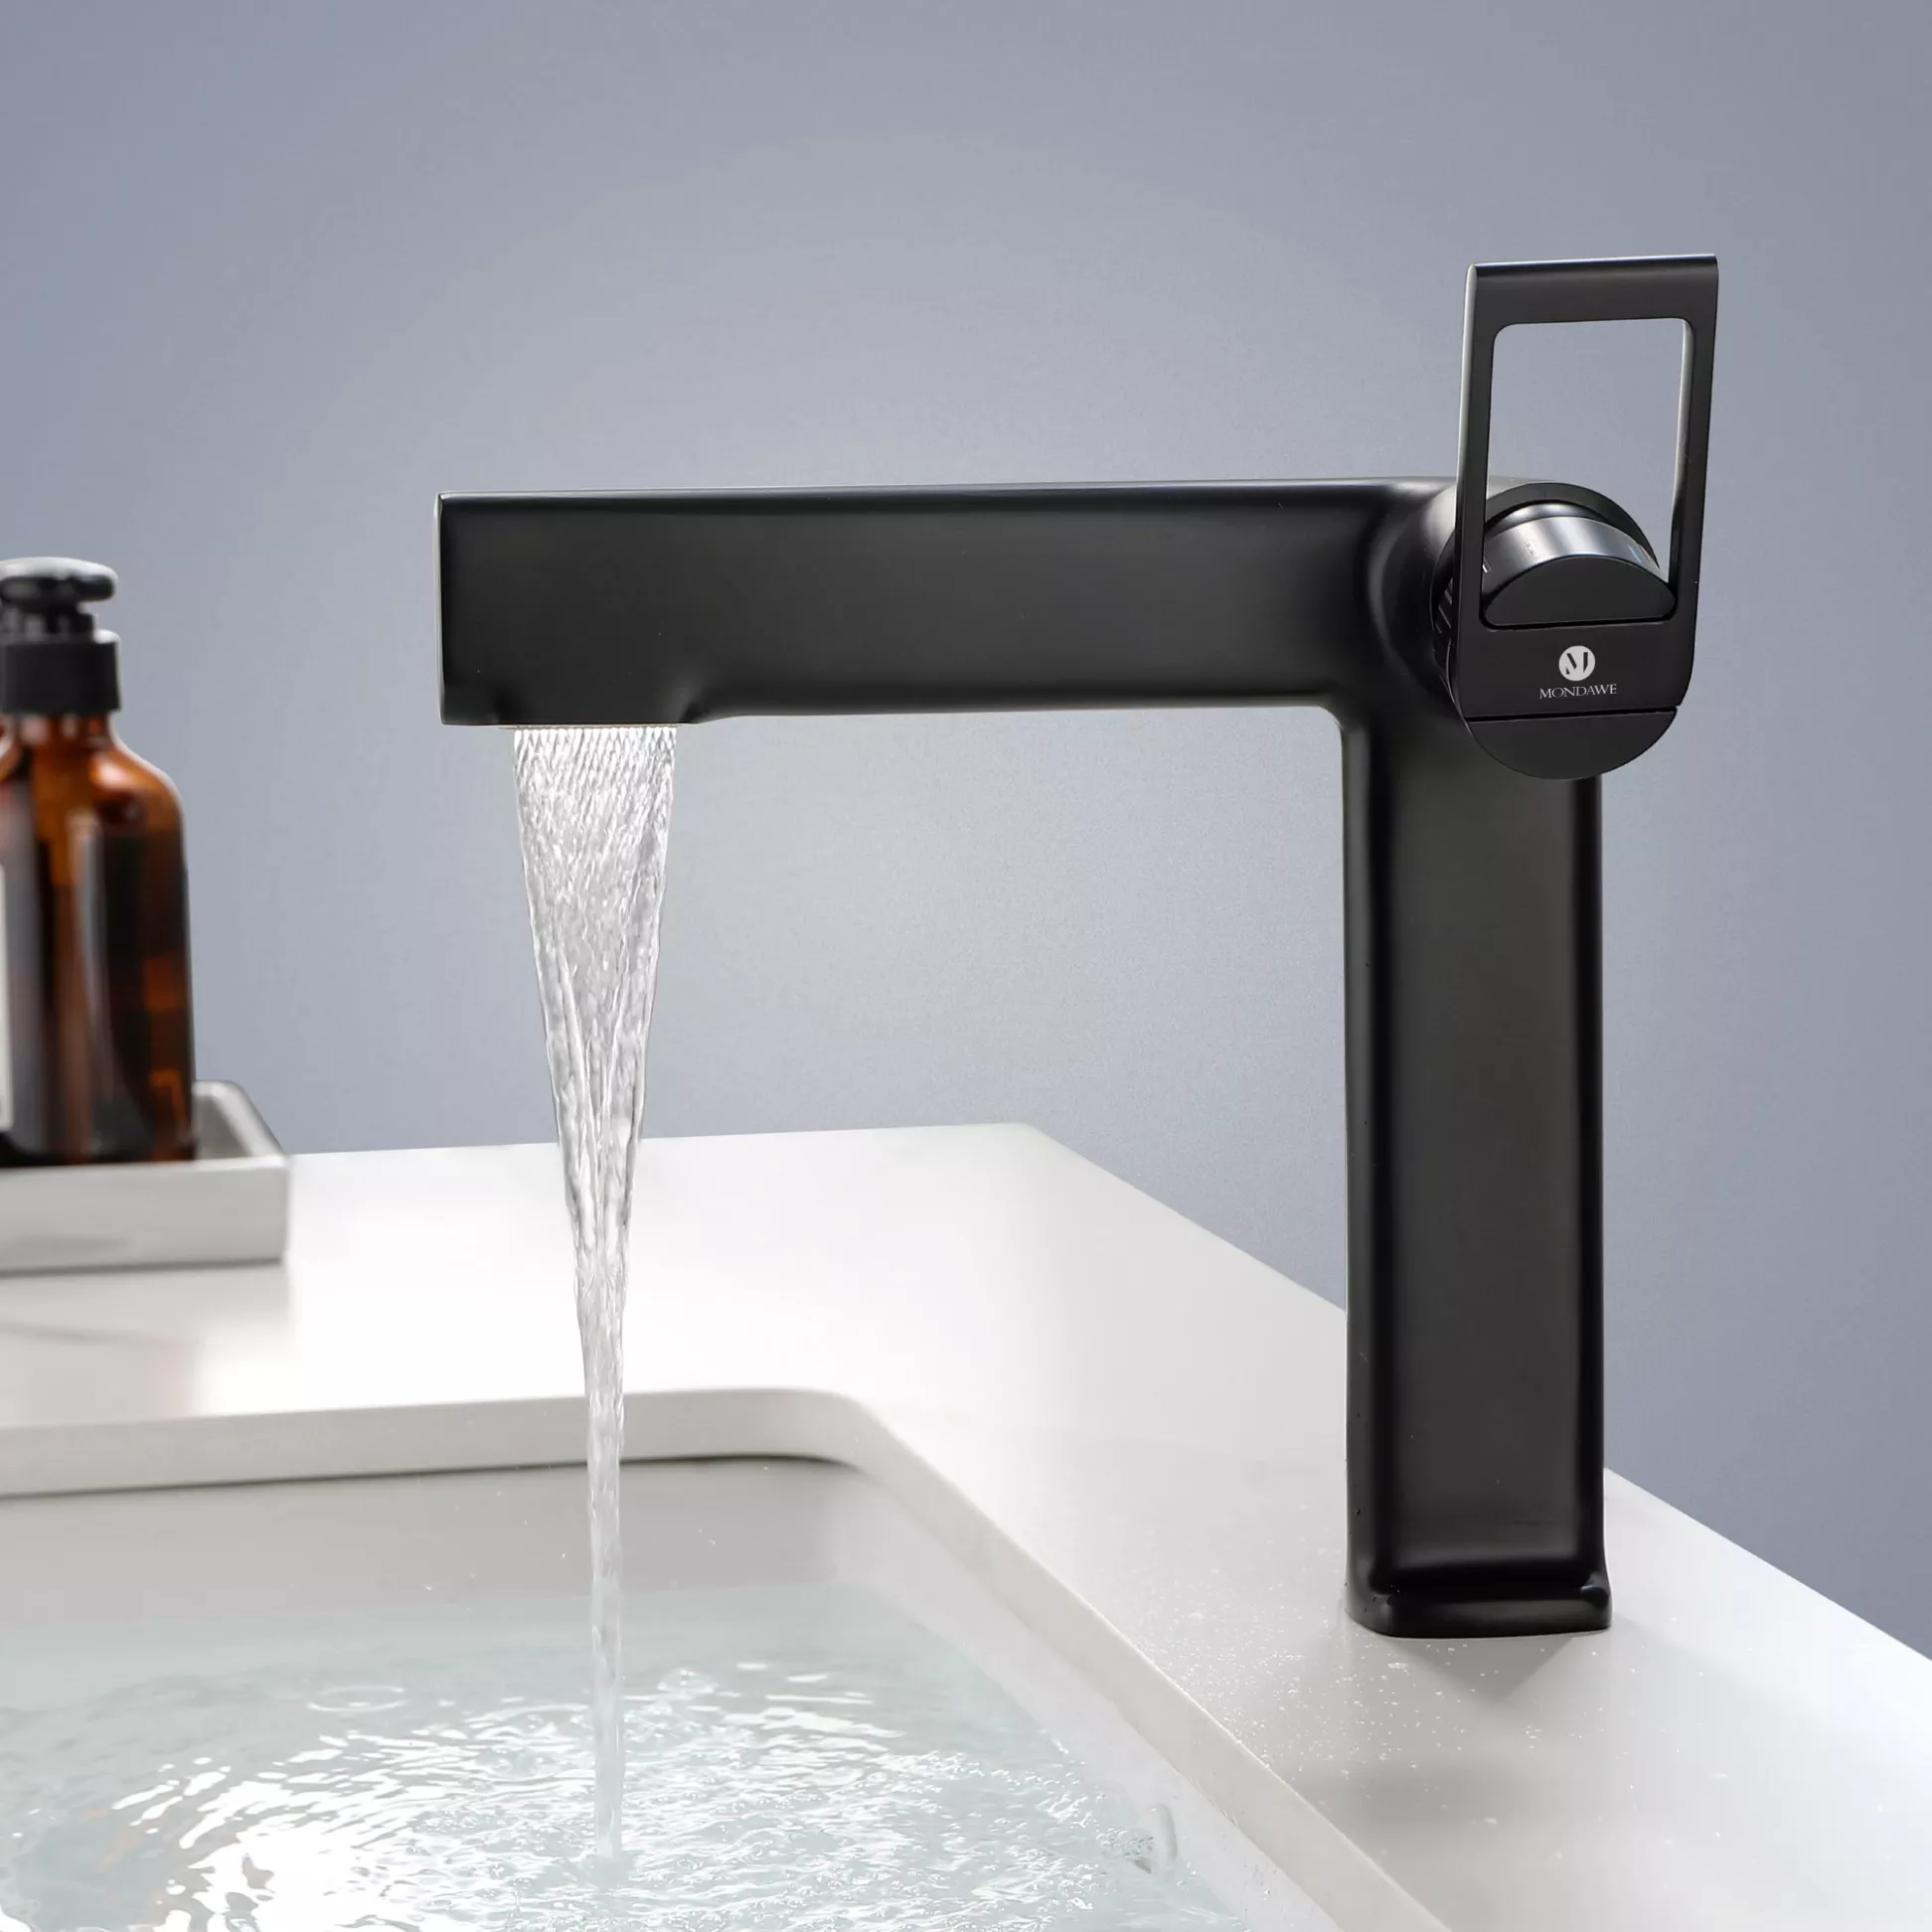 Mondawe single-hole faucet